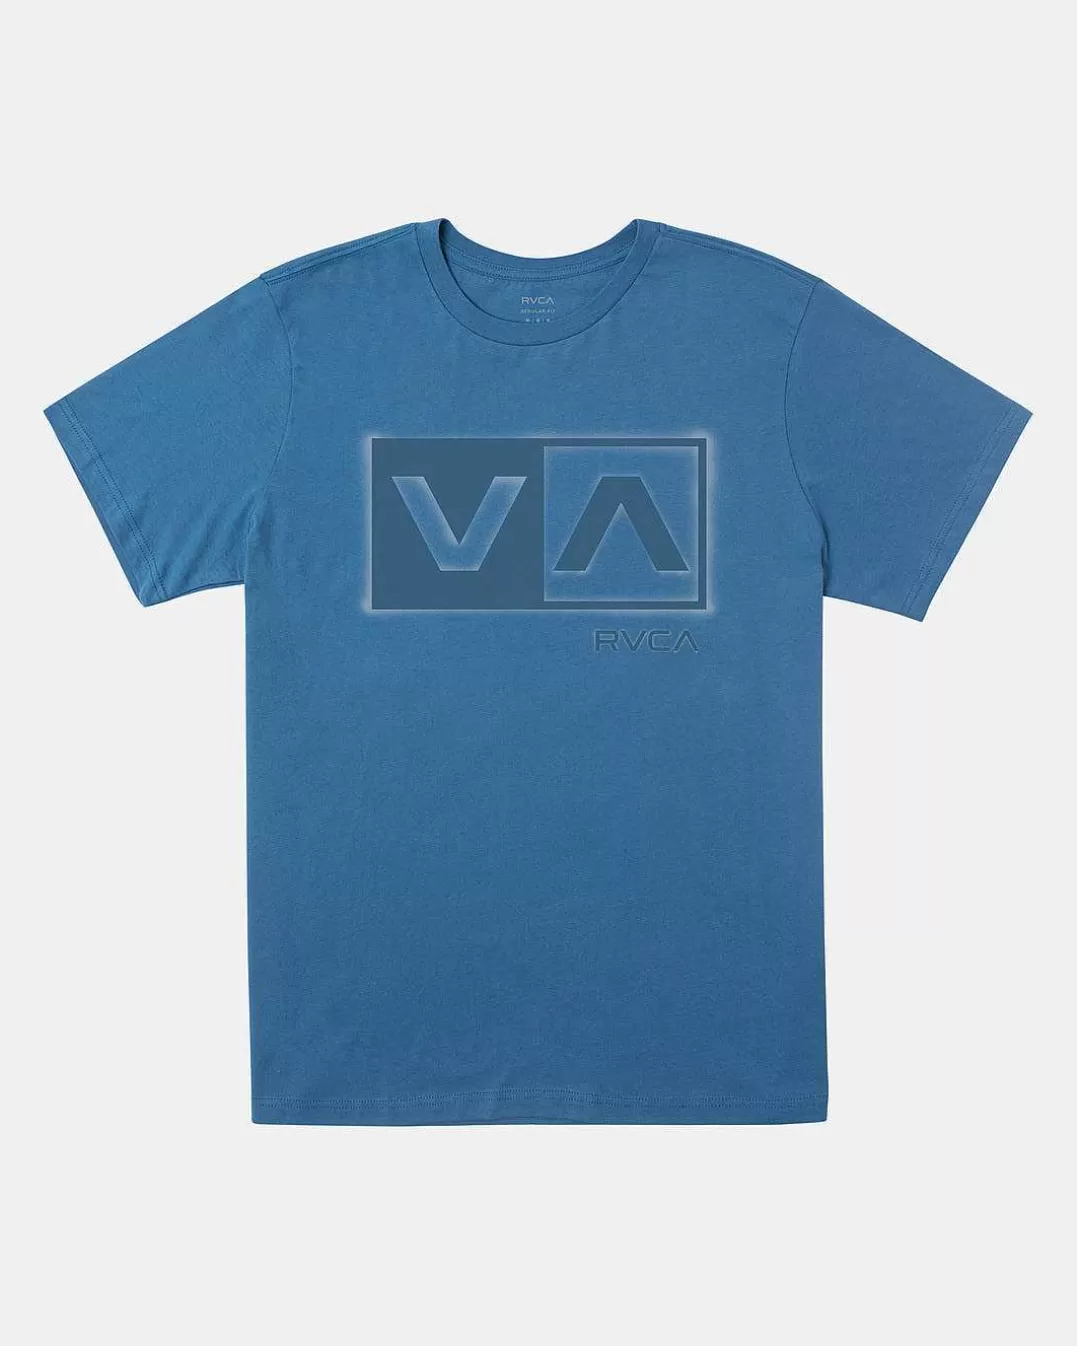 Camiseta Balance Box>RVCA Cheap